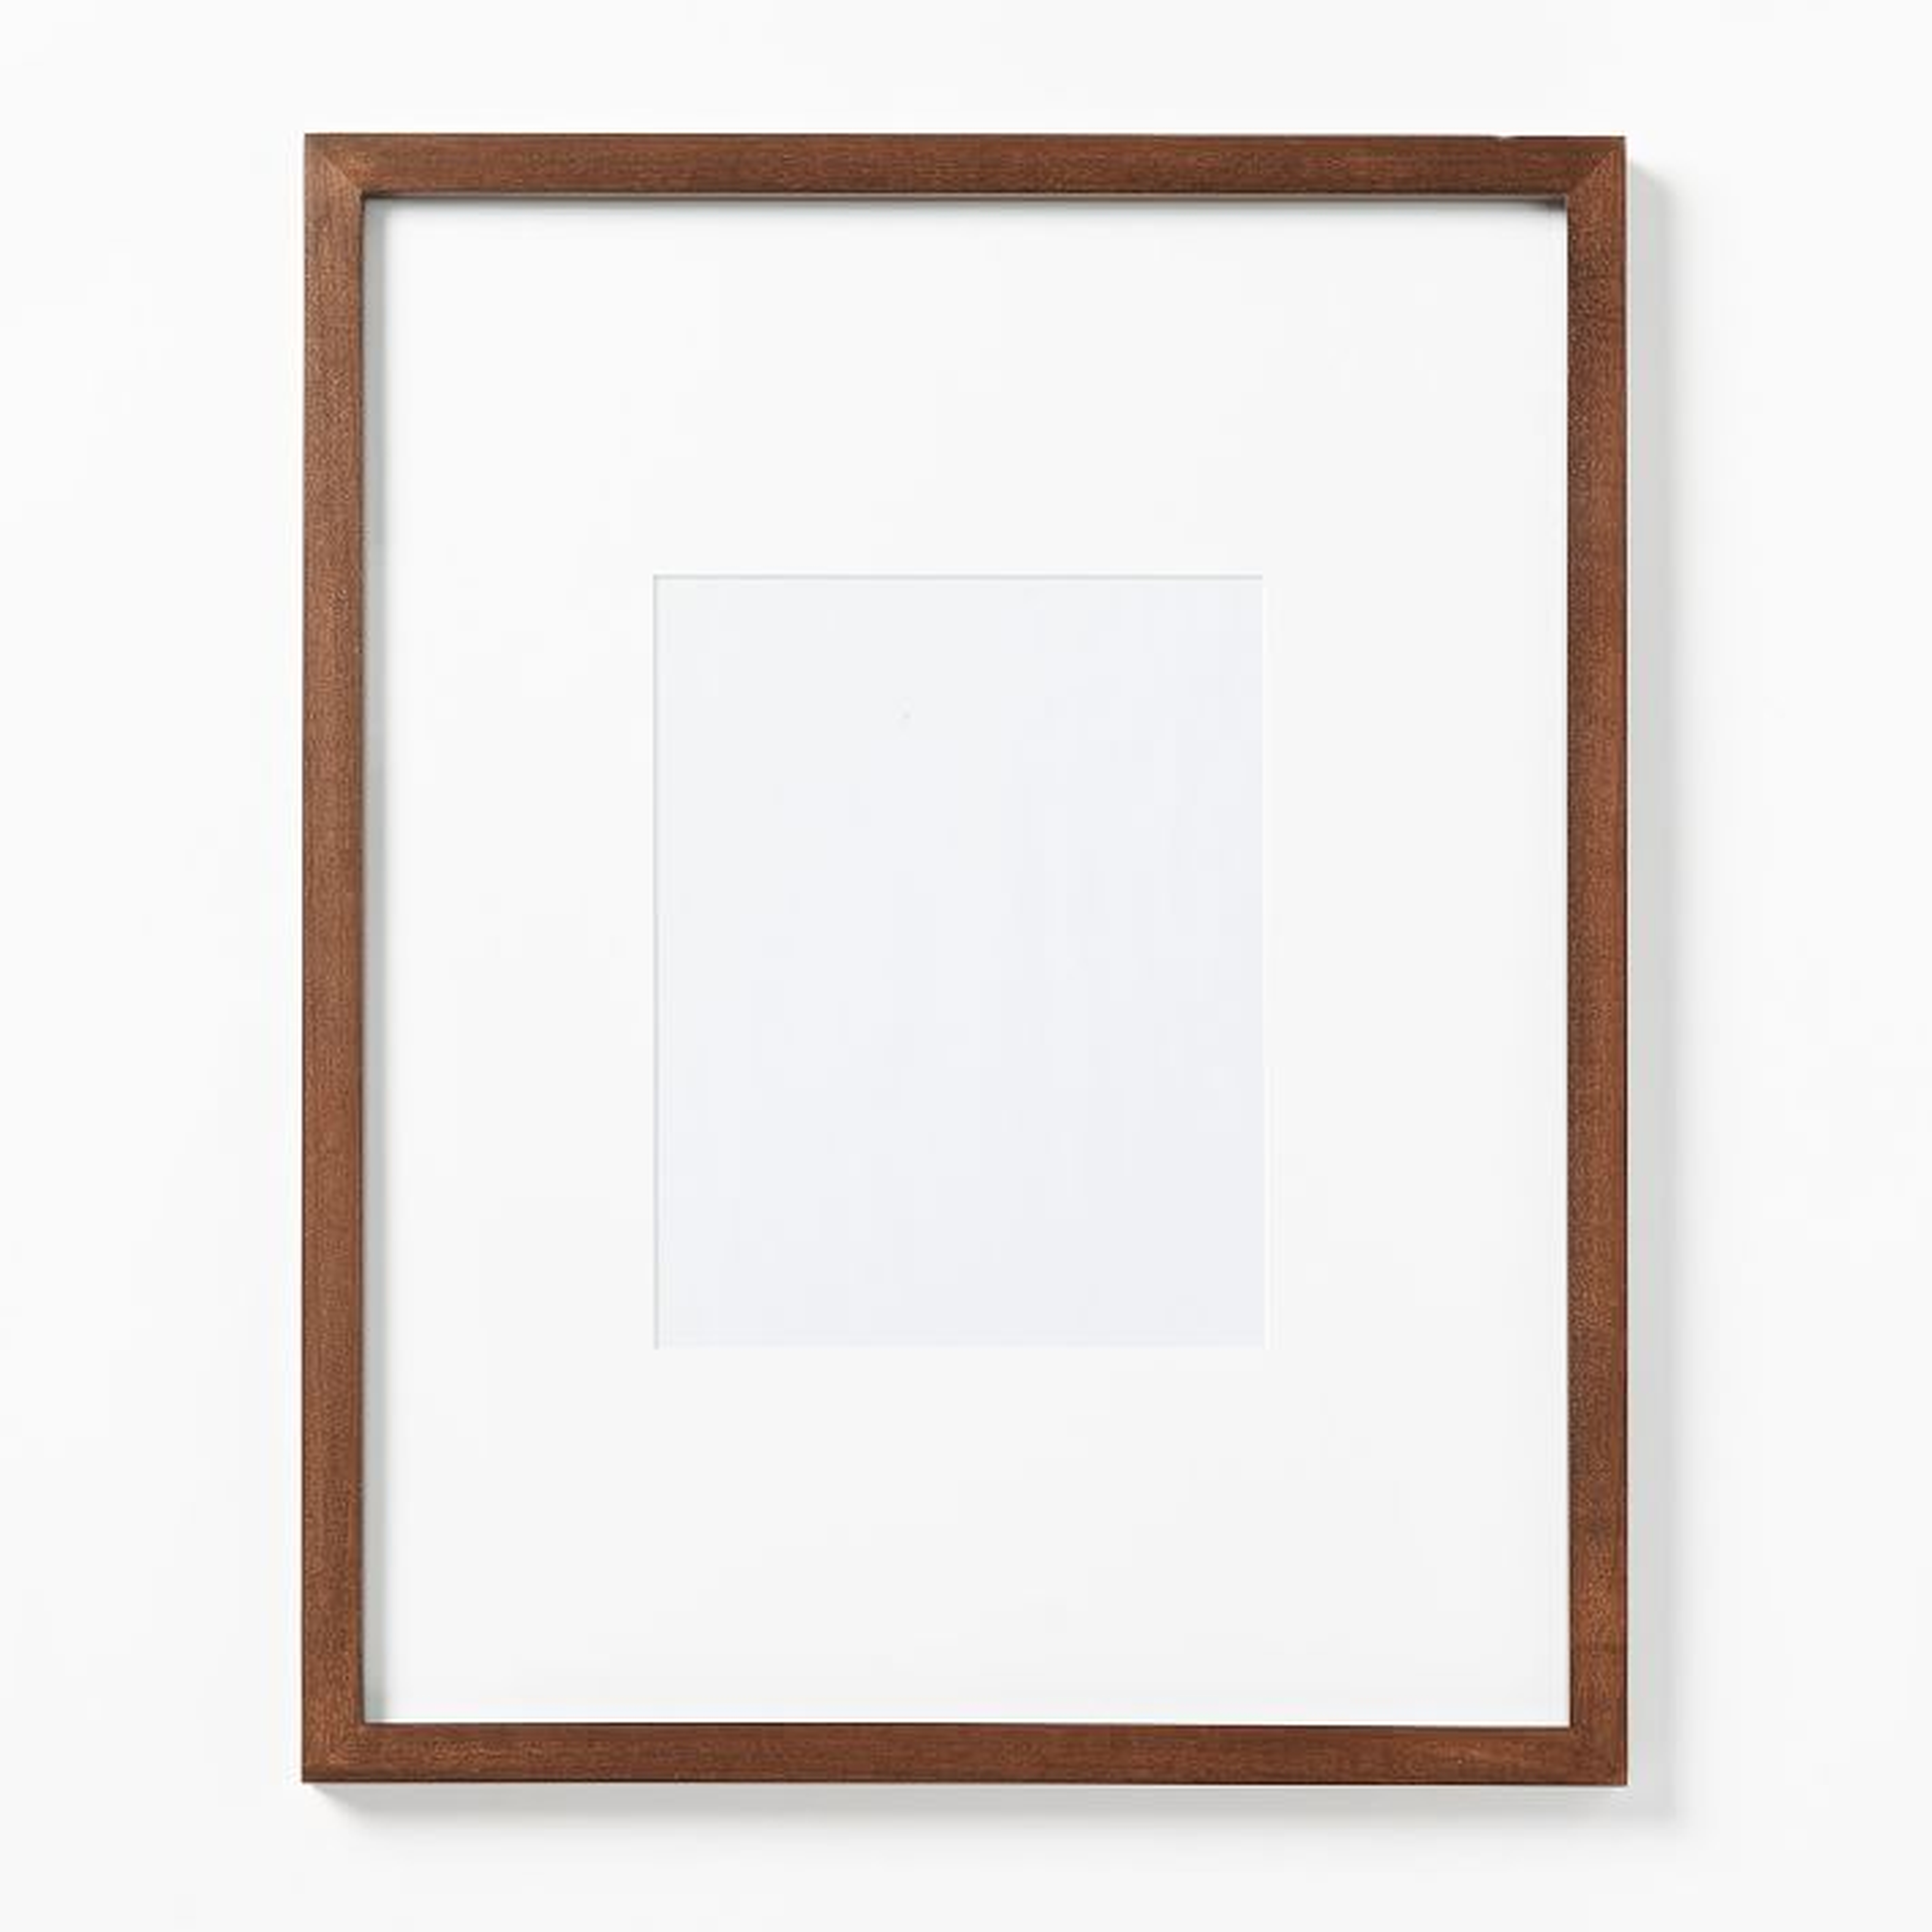 Gallery Frames, Dark Walnut, 15"x19" - West Elm